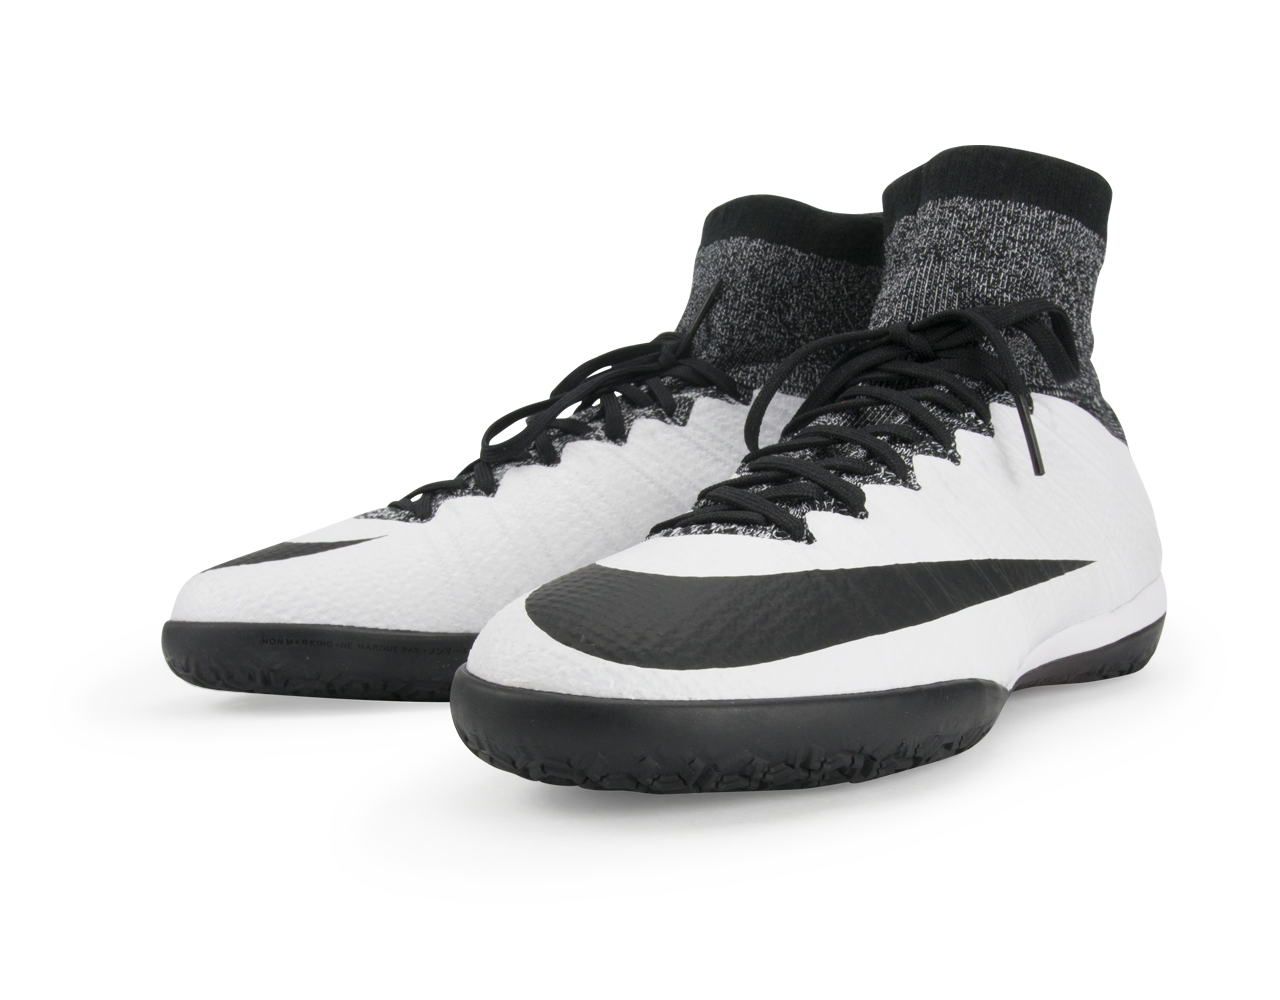 Nike Men's MercurialX Proximo Indoor Soccer Shoes White/Black